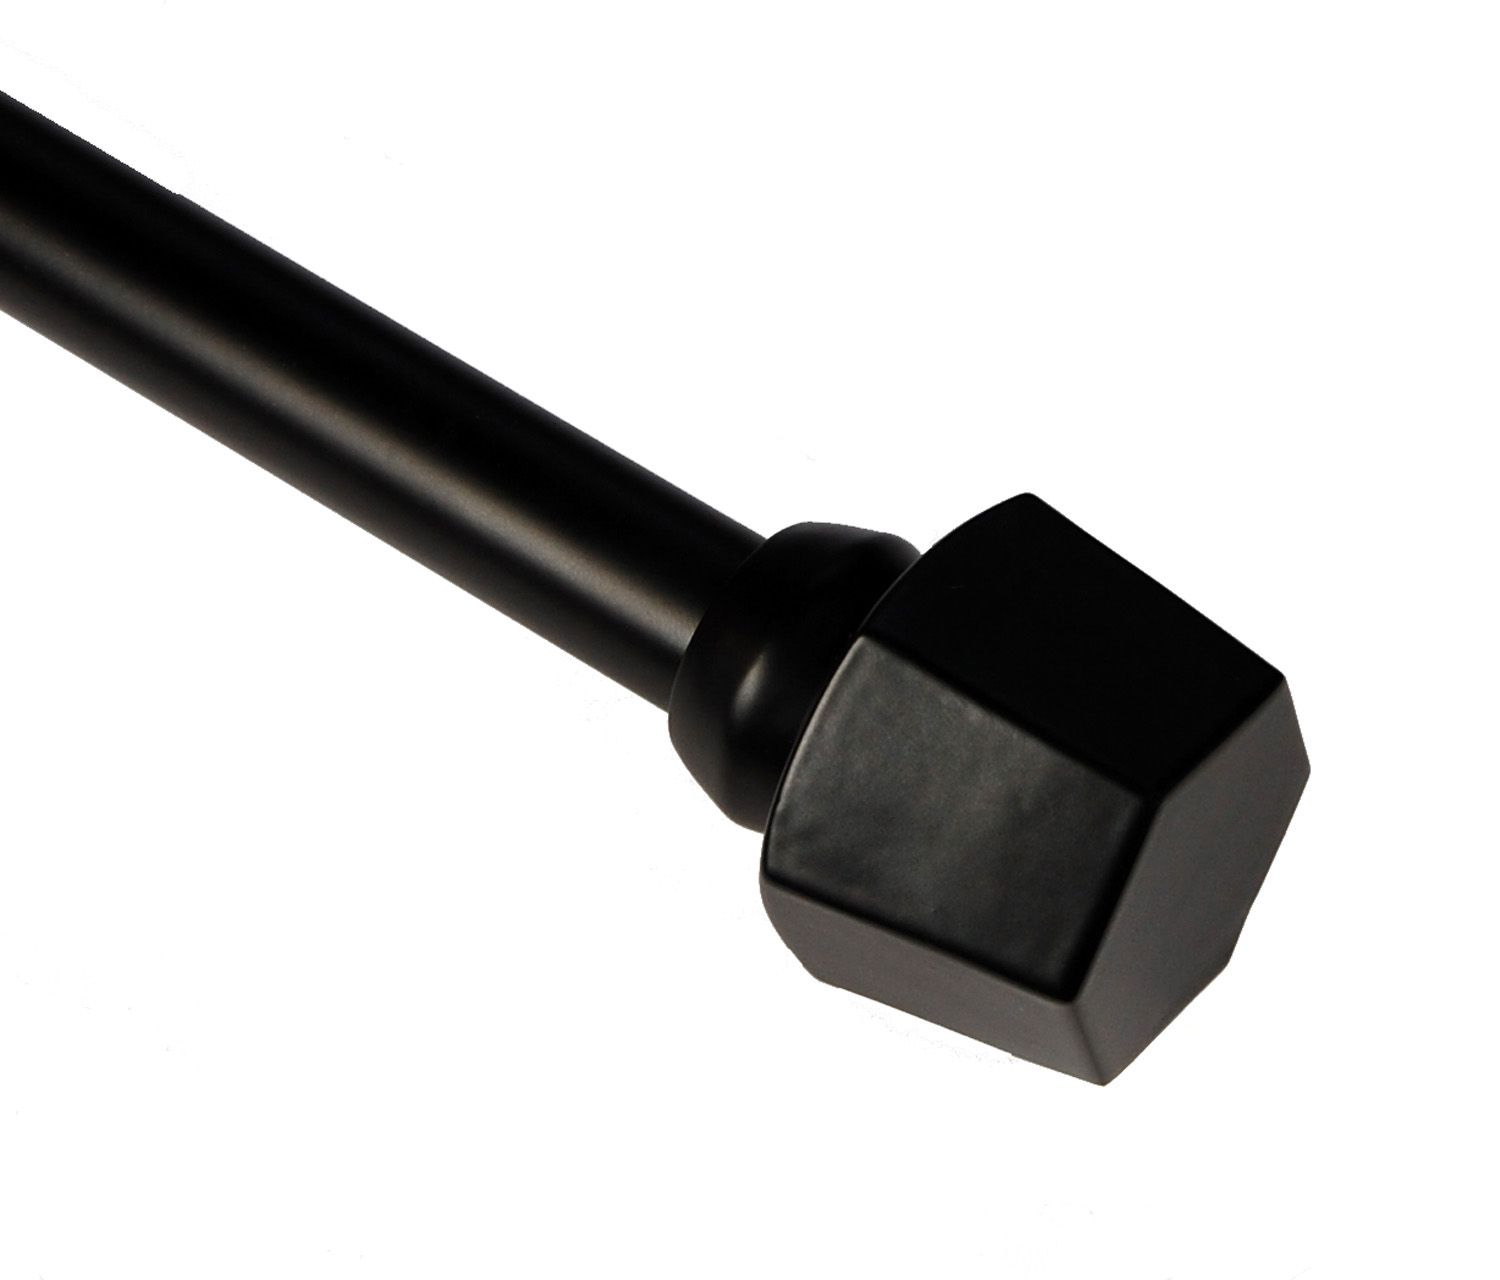 BCL Prato Curtain Rod, Black Finish, 86-inch to 120-inch, 5/8" Diameter Pole